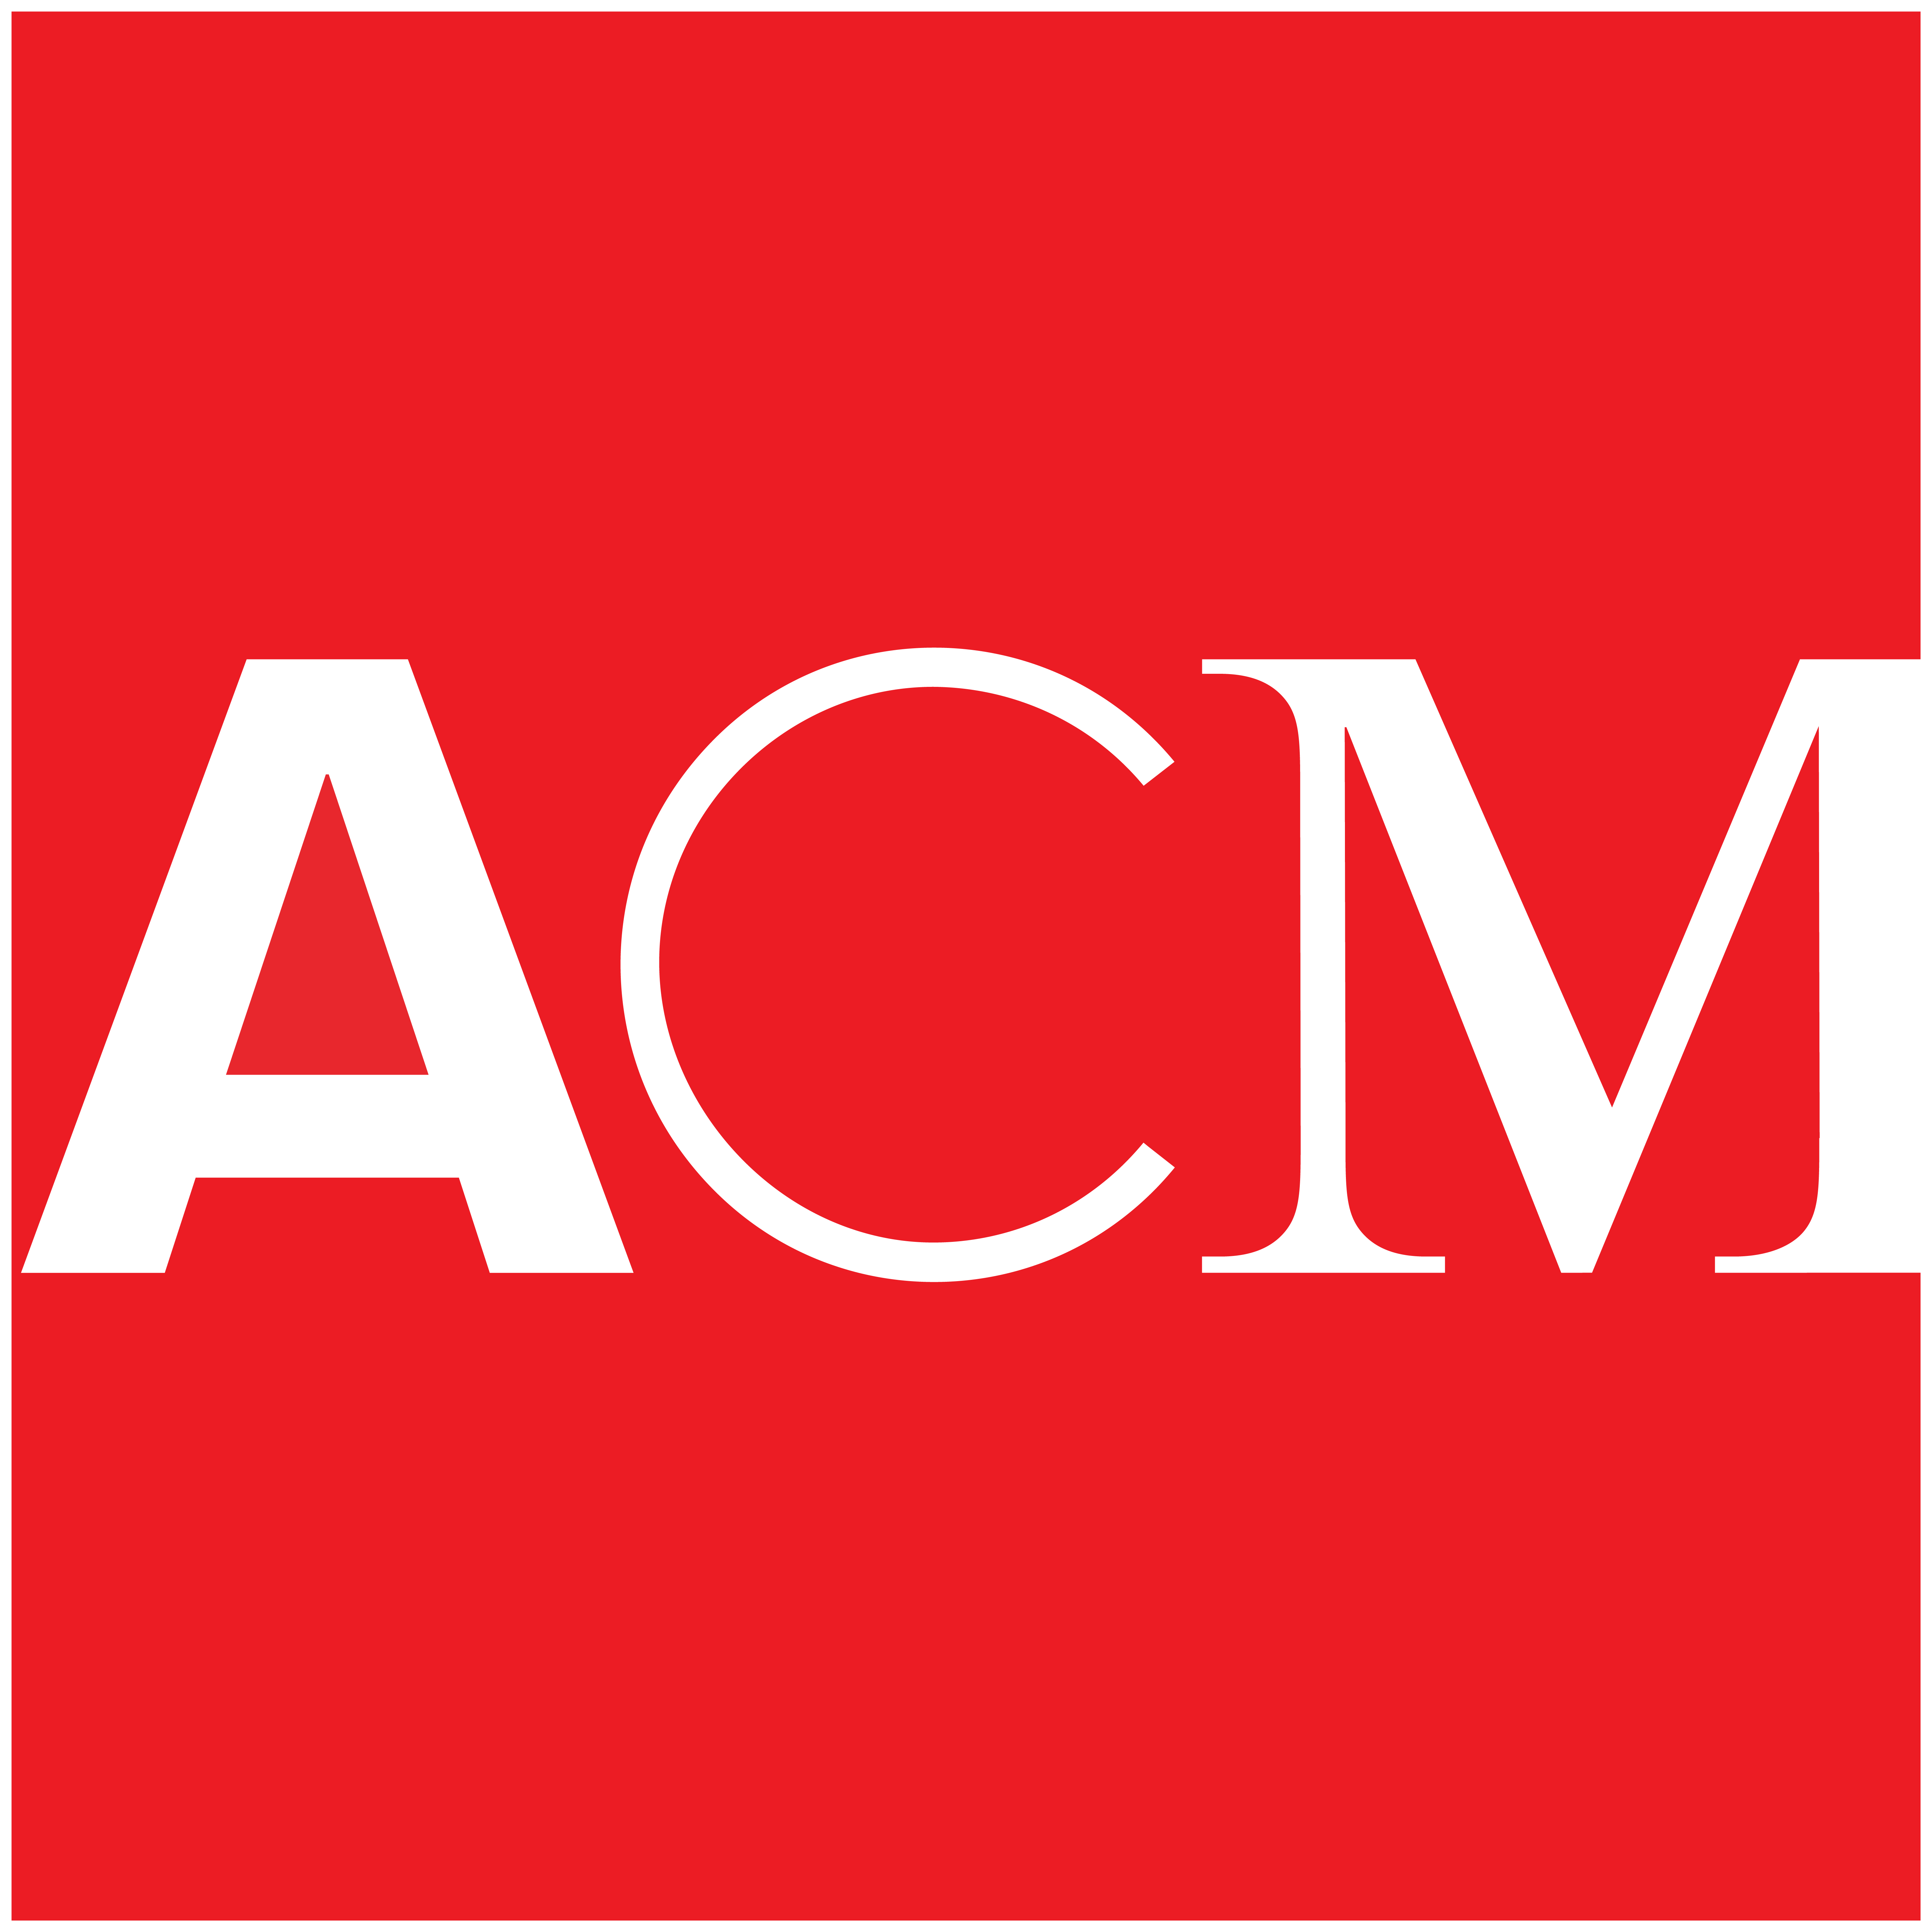 acm logo header